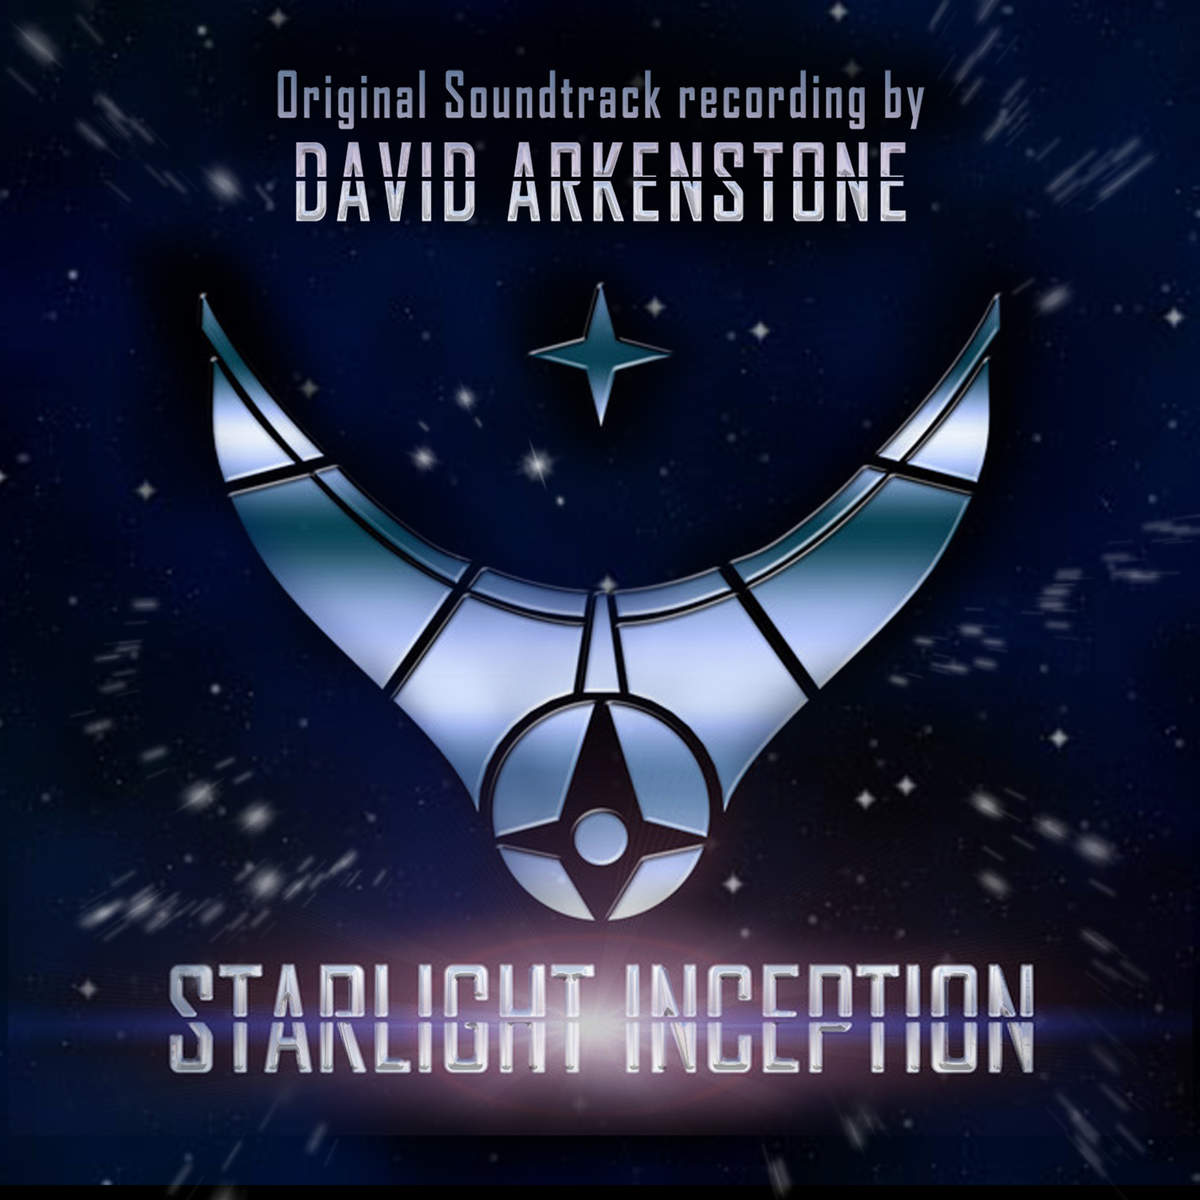 Starlight_Inception_Original_Soundtrack__cover1200x1200.jpeg